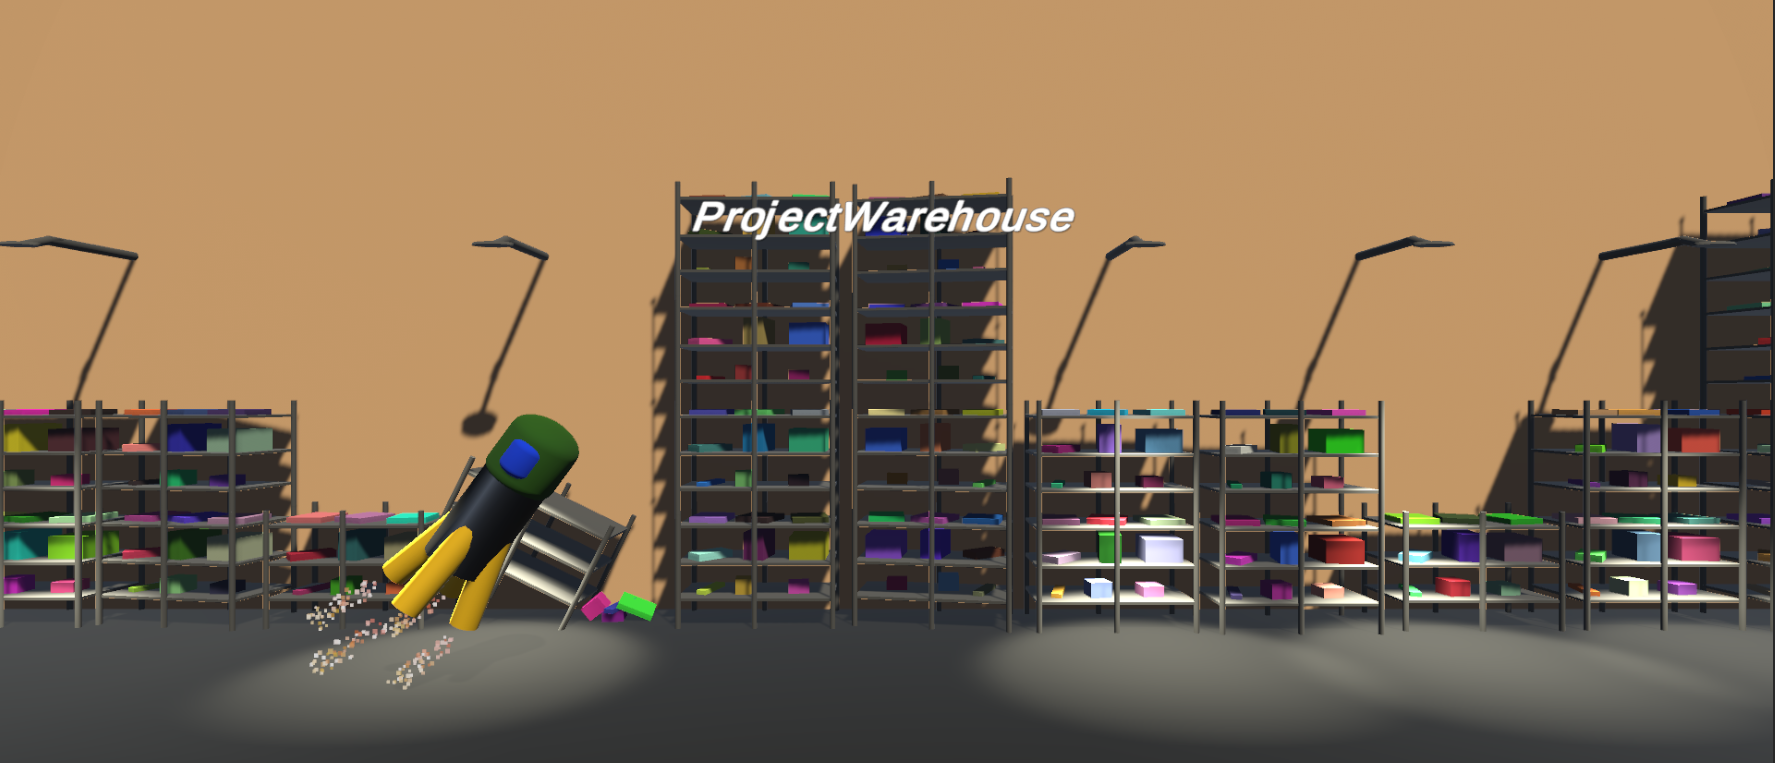 ProjectWarehouse